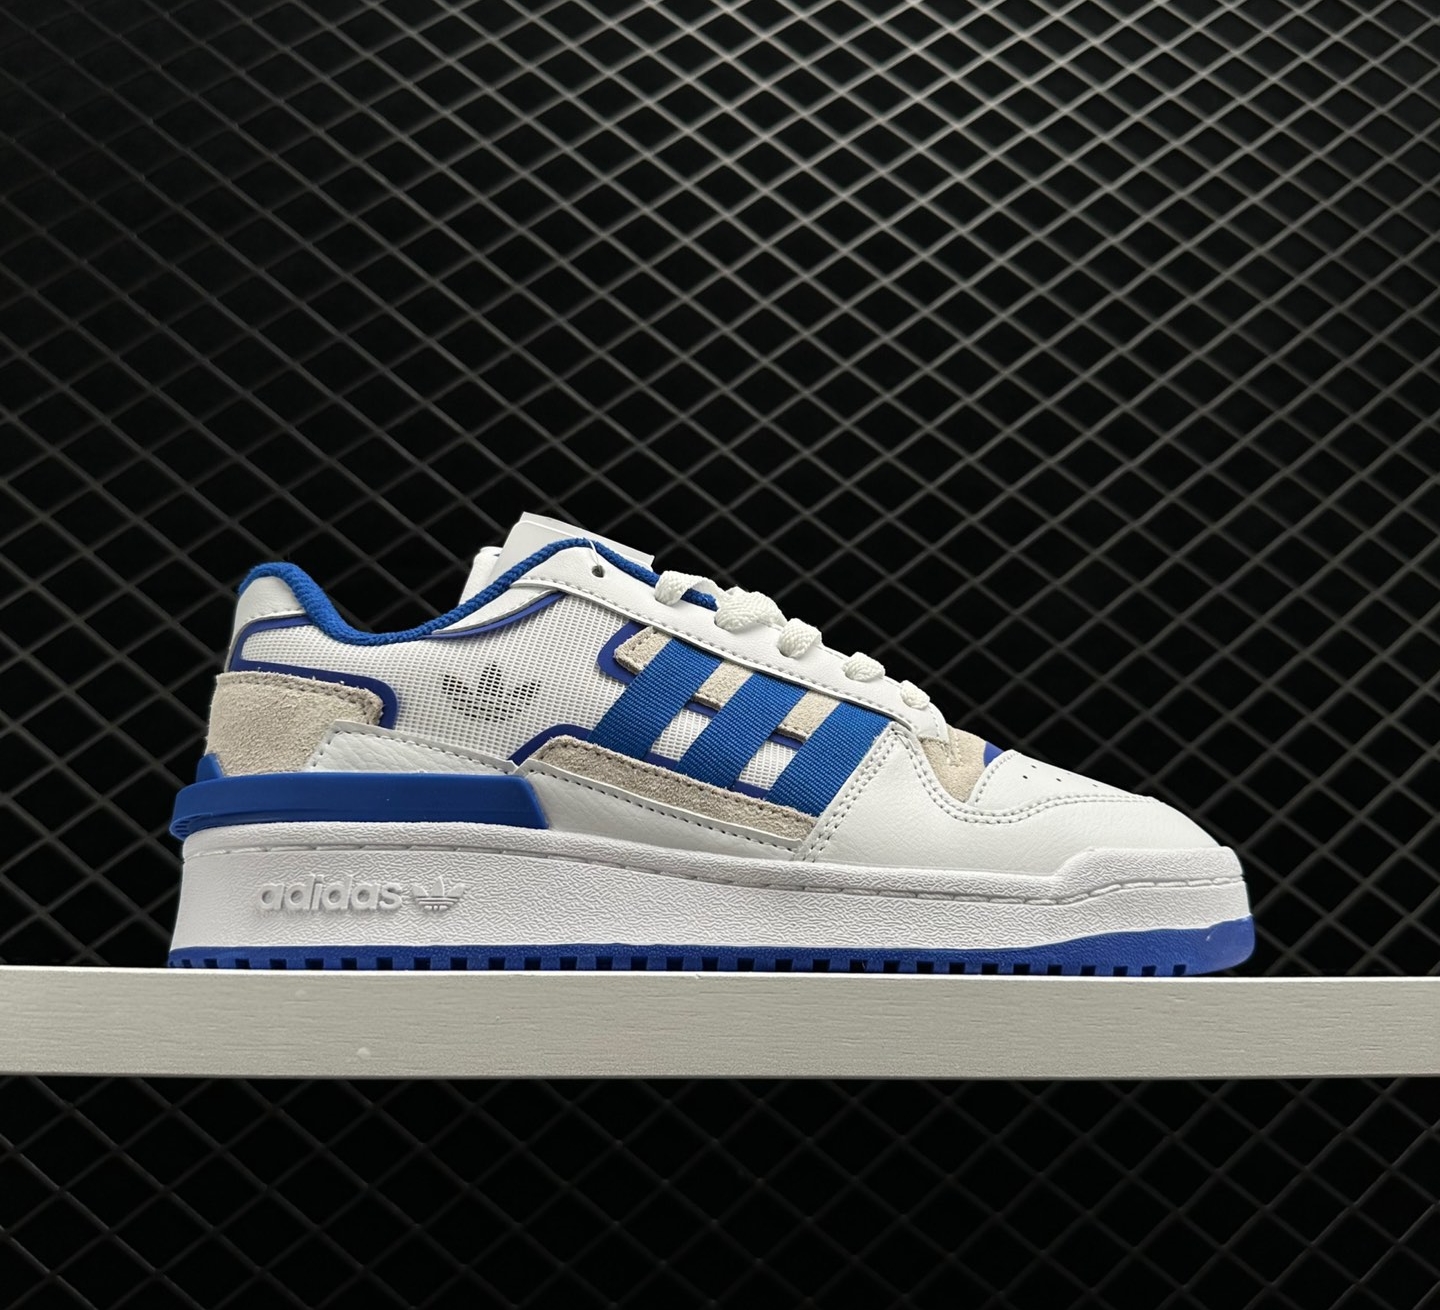 Adidas Originals Forum Exhibit Low 2 - Stylish Blue & White Shoes